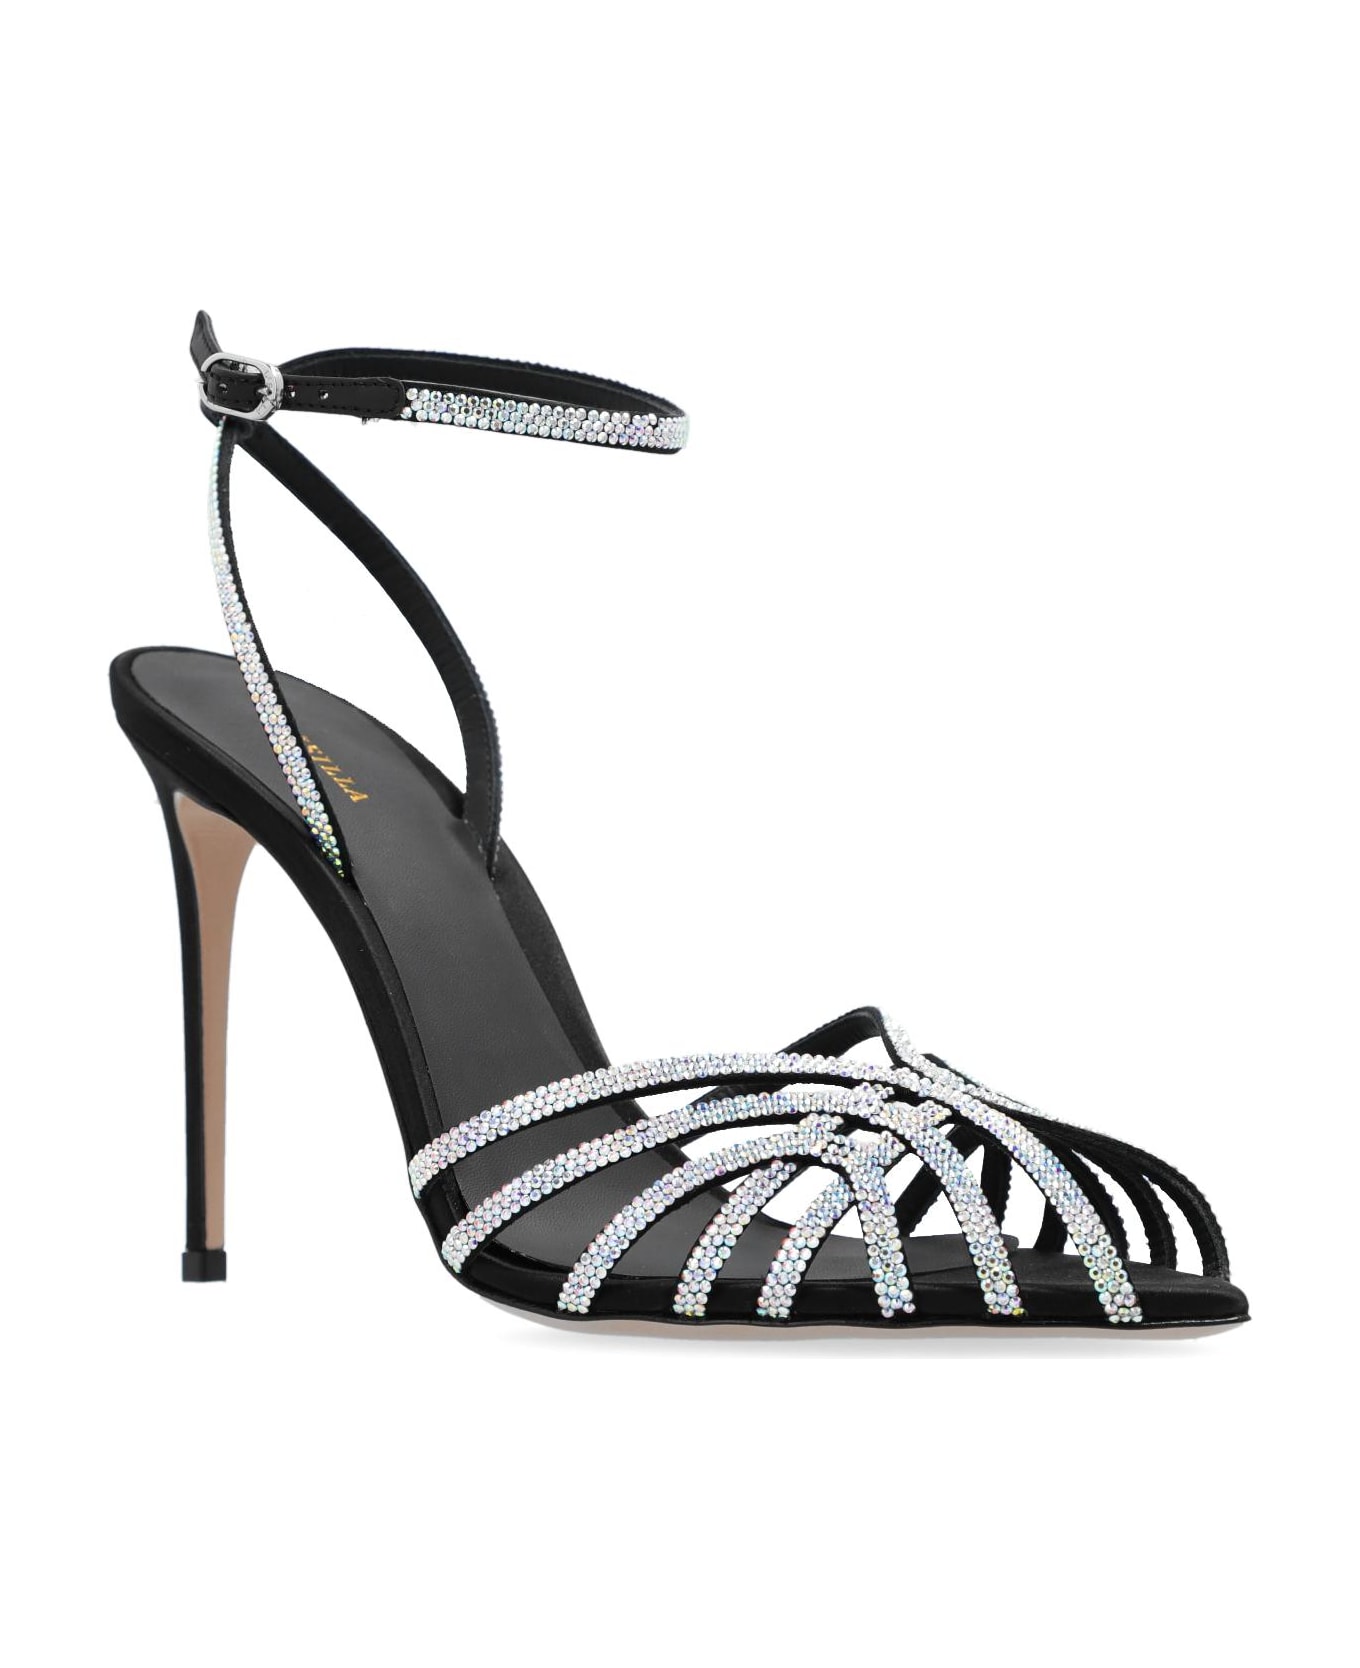 Le Silla 'bella' Heeled Sandals - NERO/CRYSTAL サンダル